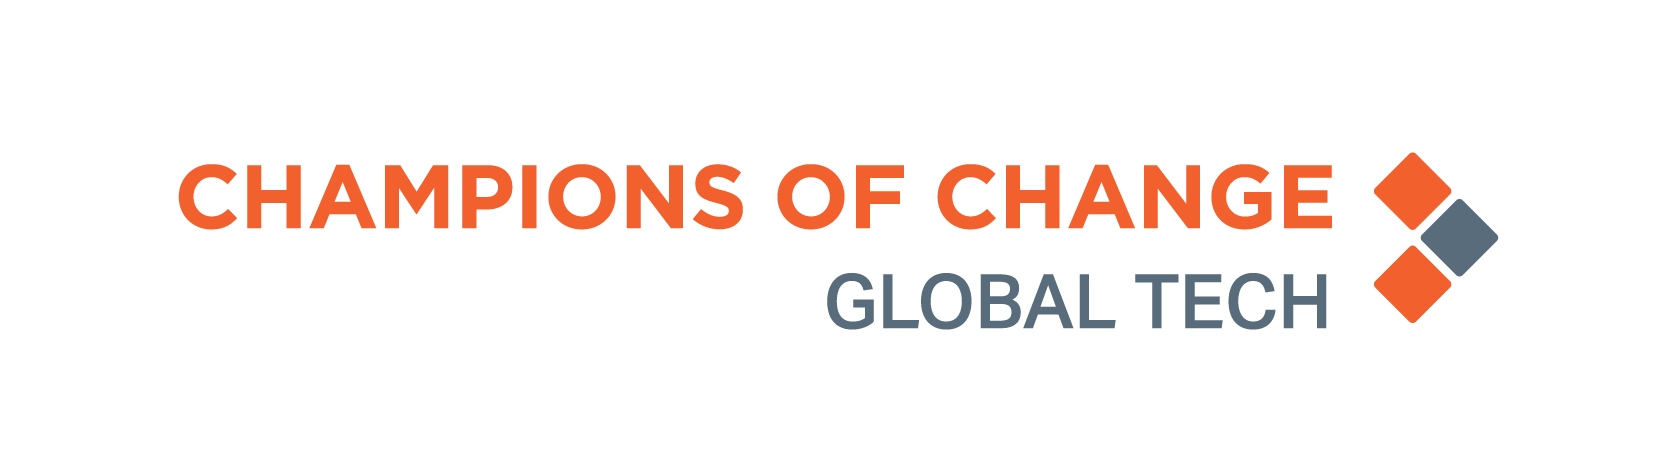 Champions of Change Global Tech Group Logo